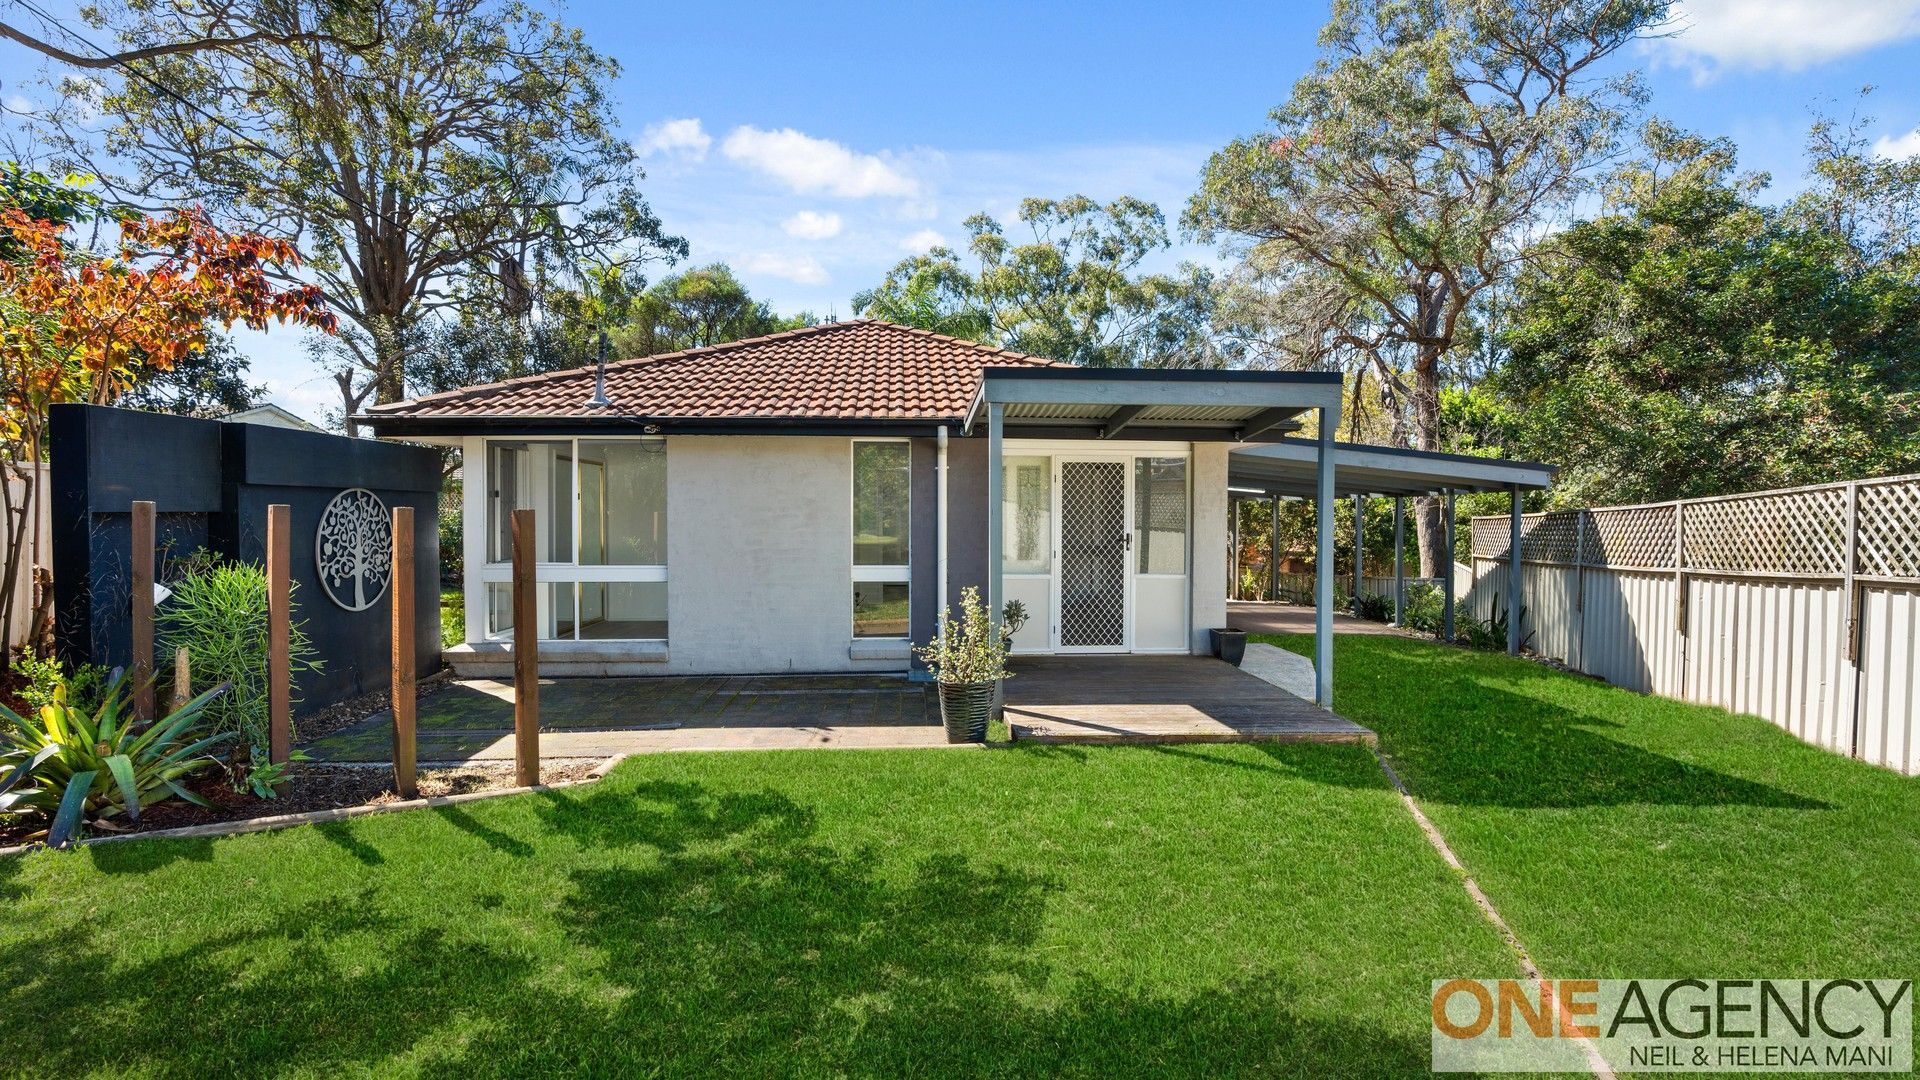 2 bedrooms House in 3A Hillside Drive BERKELEY VALE NSW, 2261